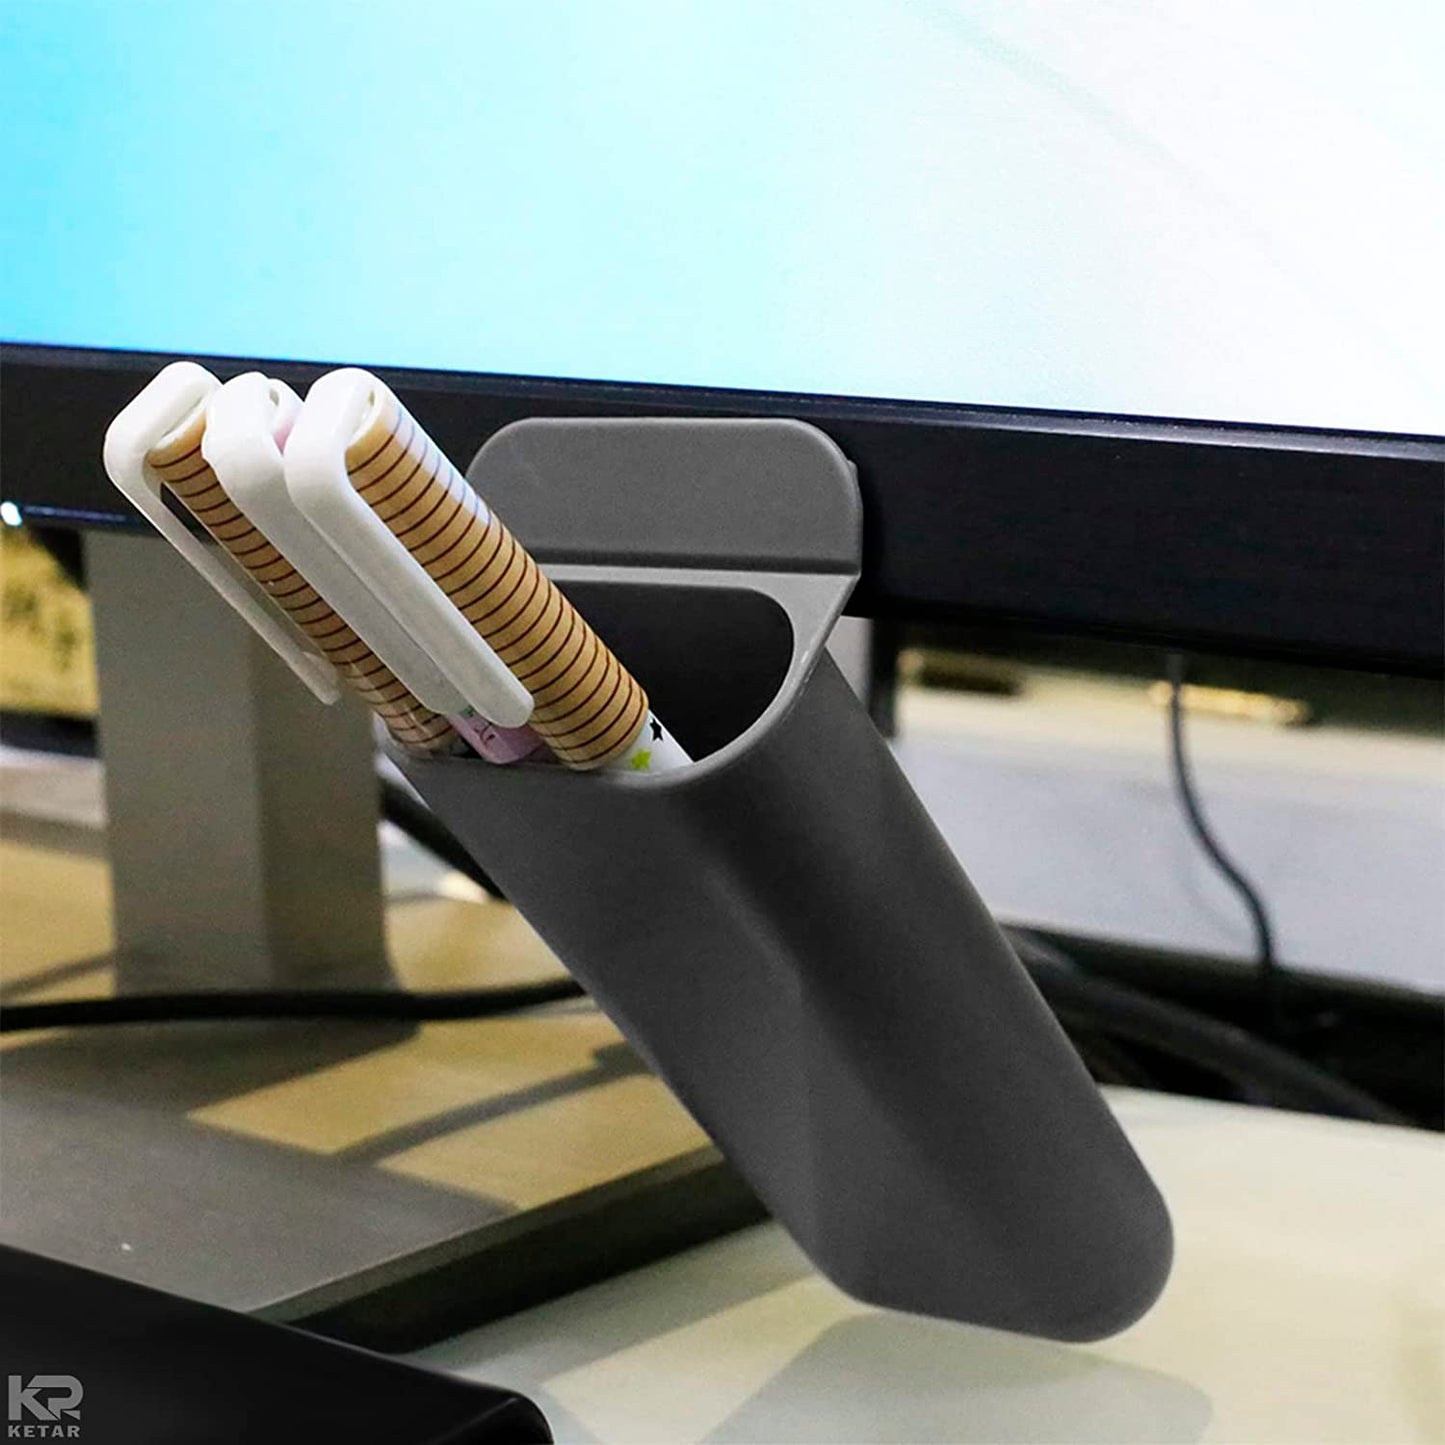 3Pcs Desktop Pen Holder Organizer - for Home Office Desk Accessories